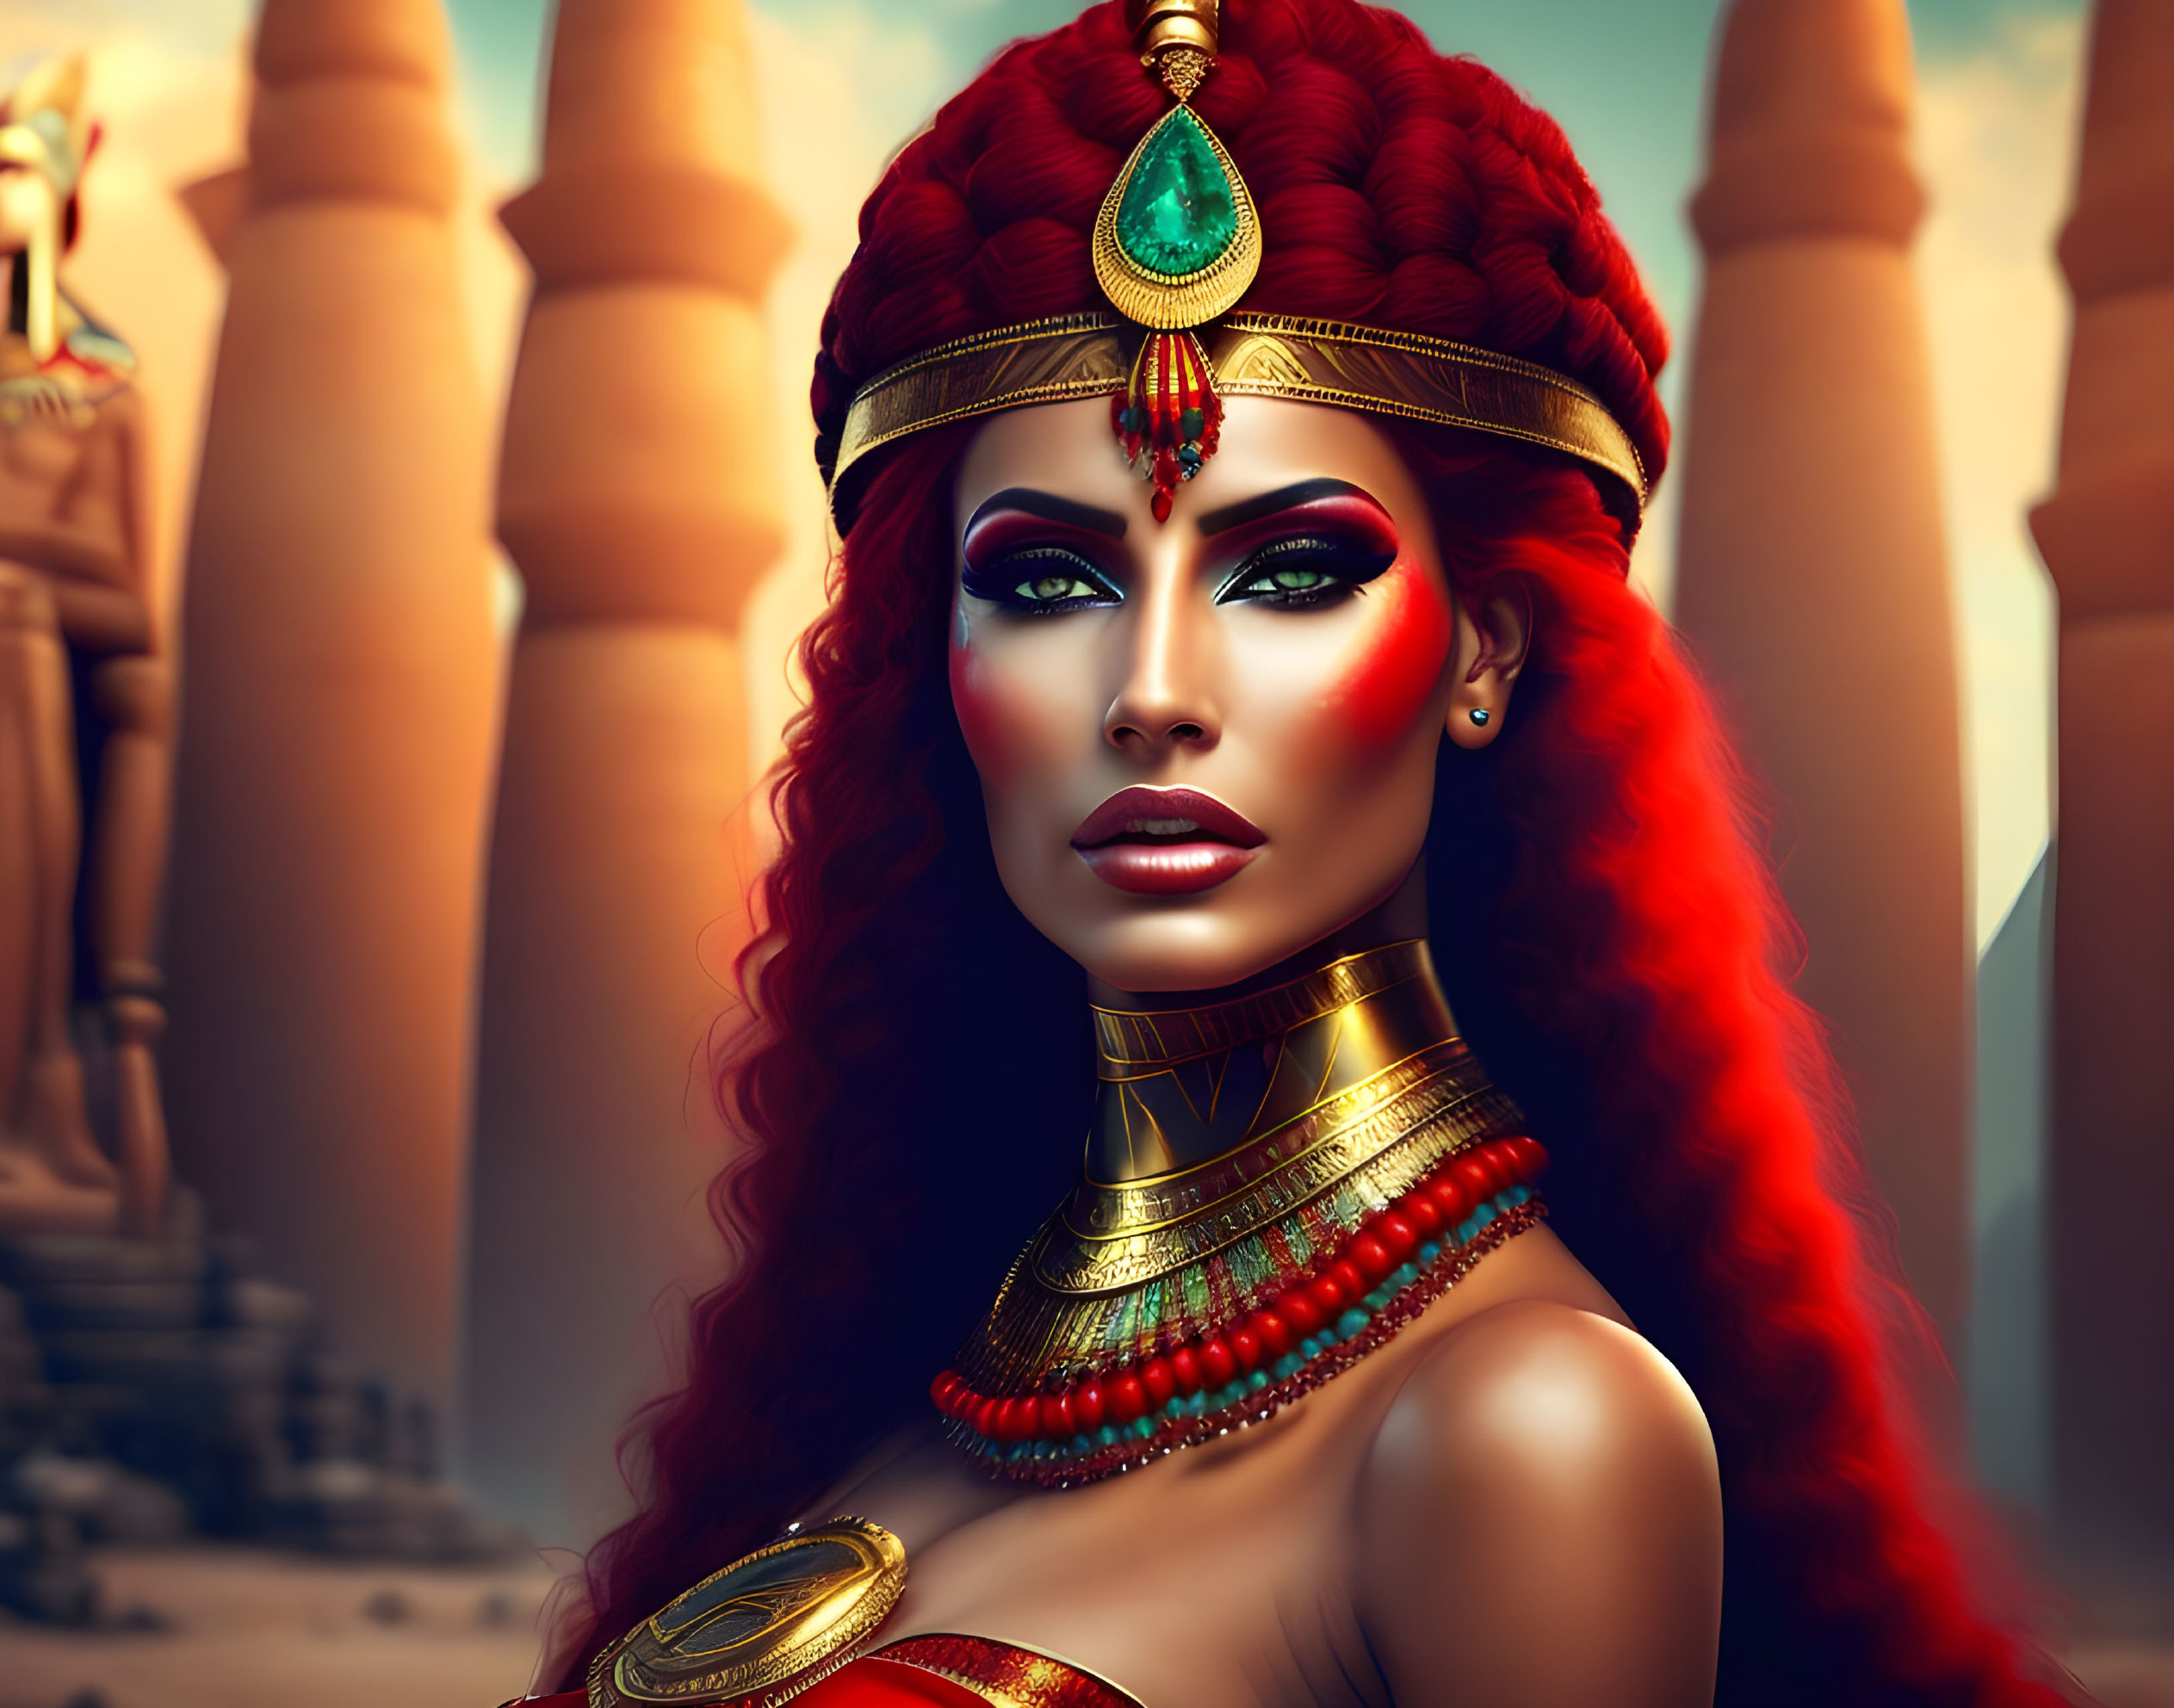 Cleopatra was a redhead